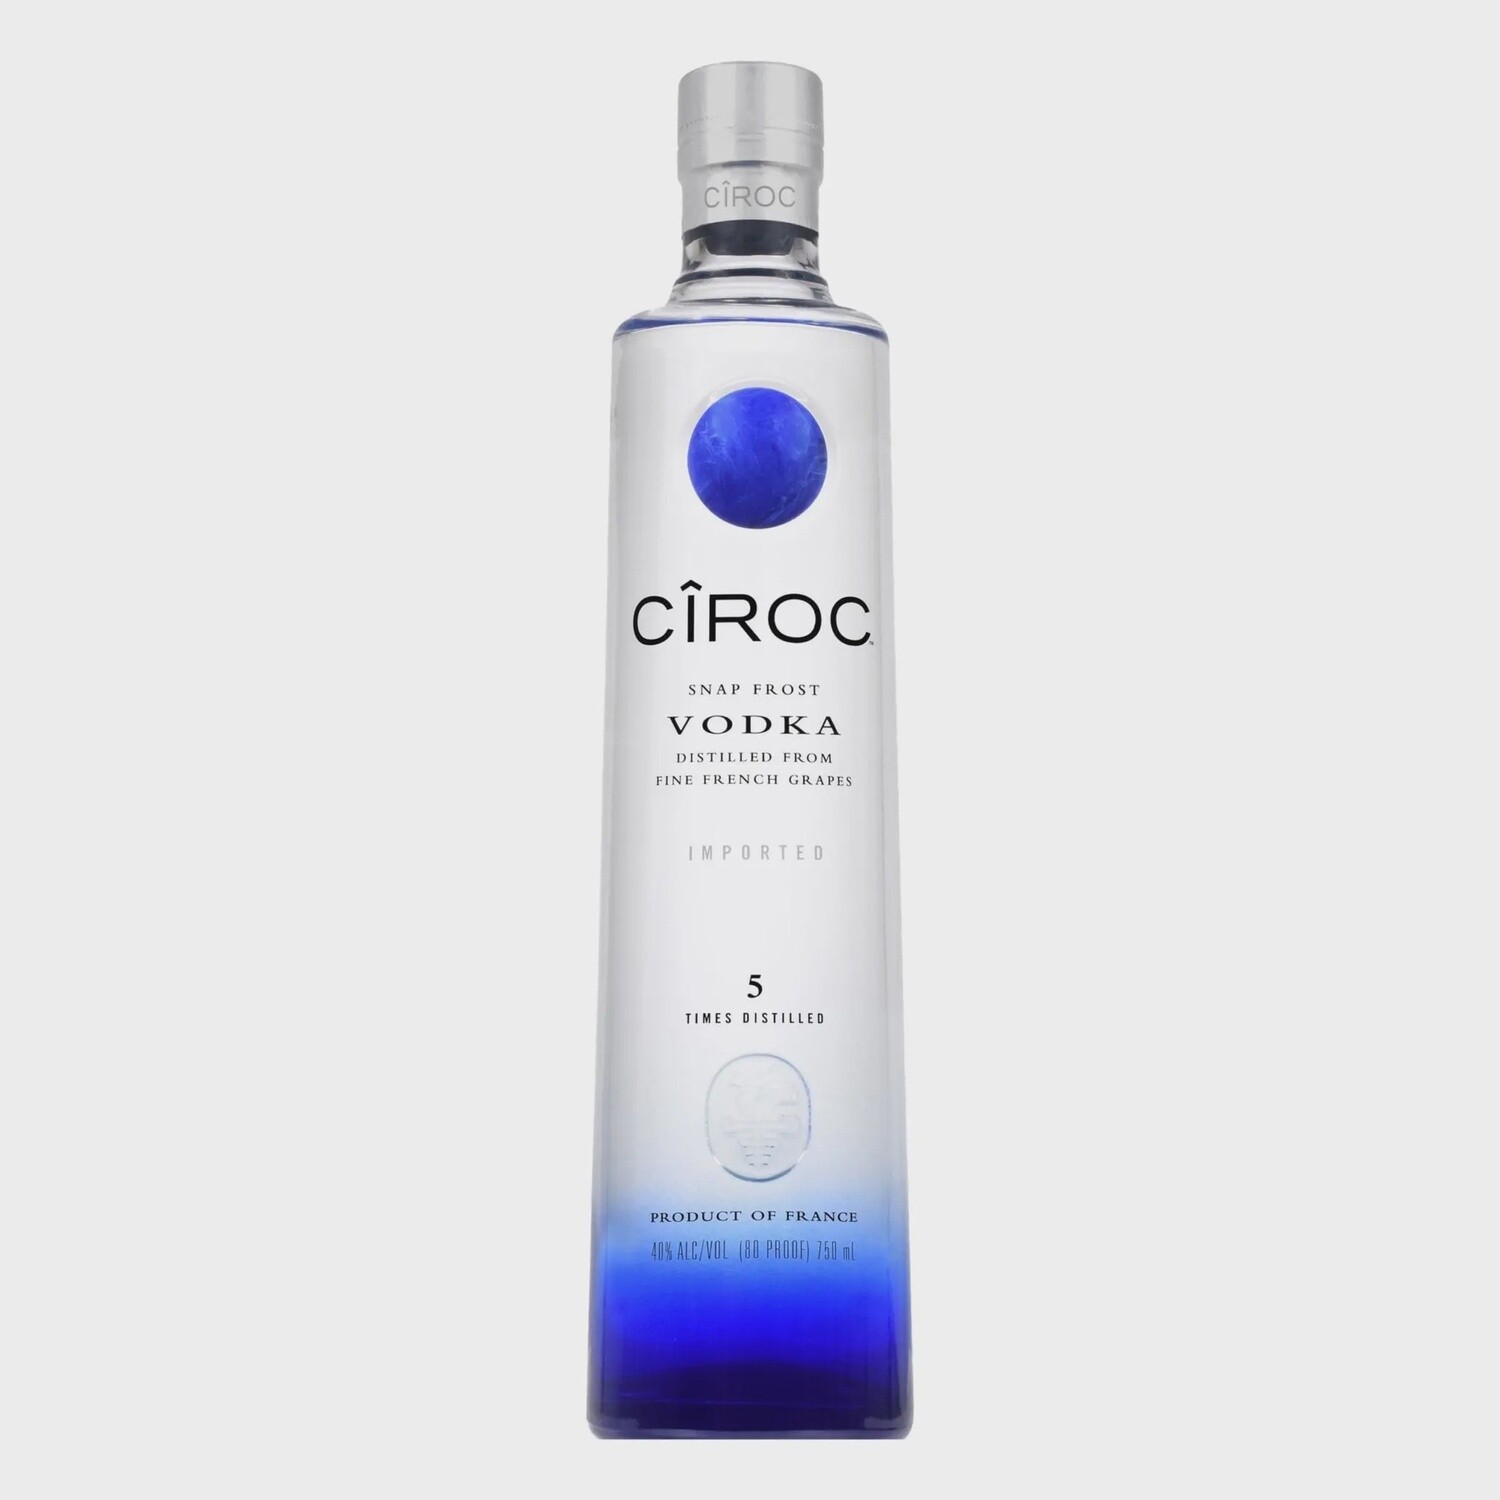 Ciroc Snap Frost Vodka (750ml)